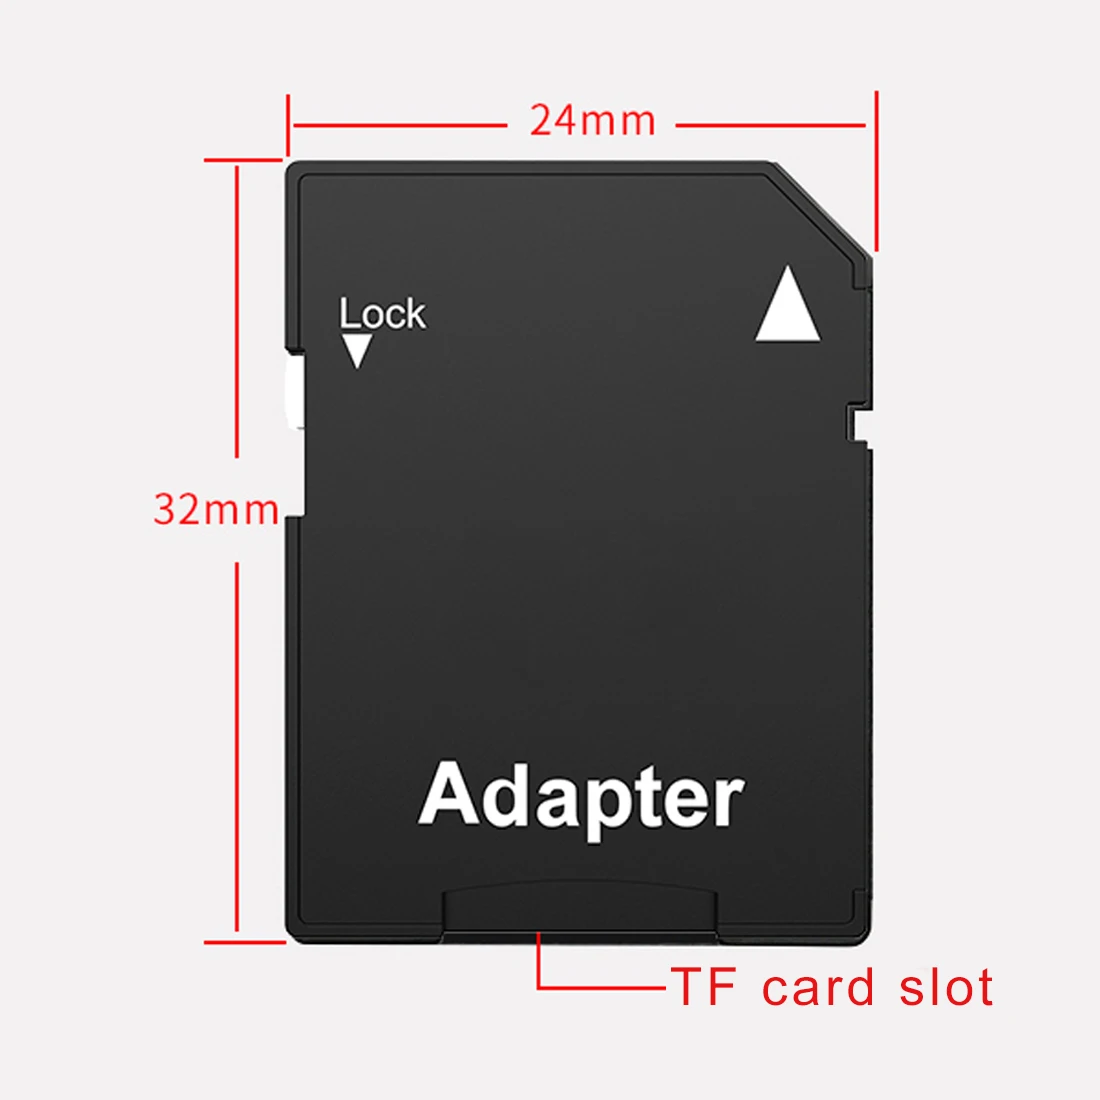 Etmakit 2 шт. Лидер продаж Популярные Флэшка MicroSD TF для SD SDHC карты памяти адаптер преобразовать в SD